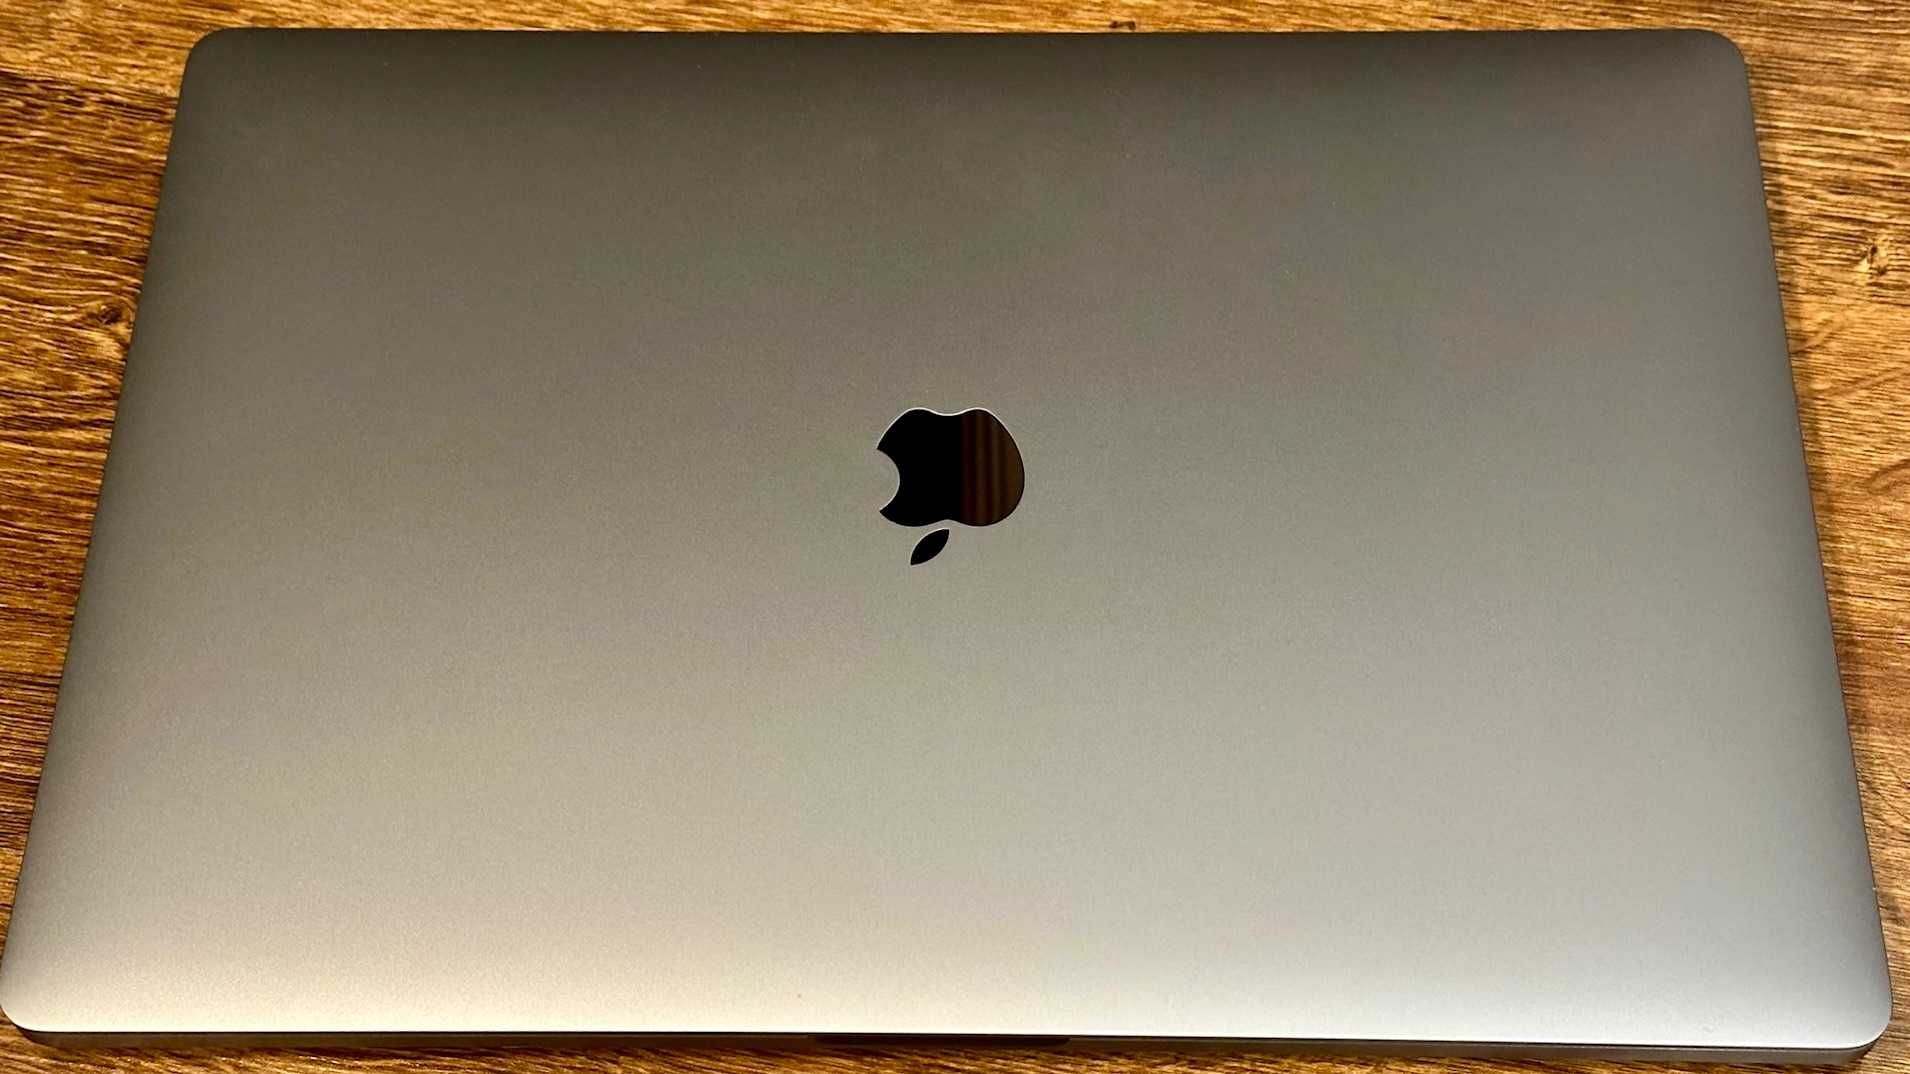 MacBook Pro 16", Model 2019 (A2141), CPU Intel i7, 16GB RAM, 512GB SSD